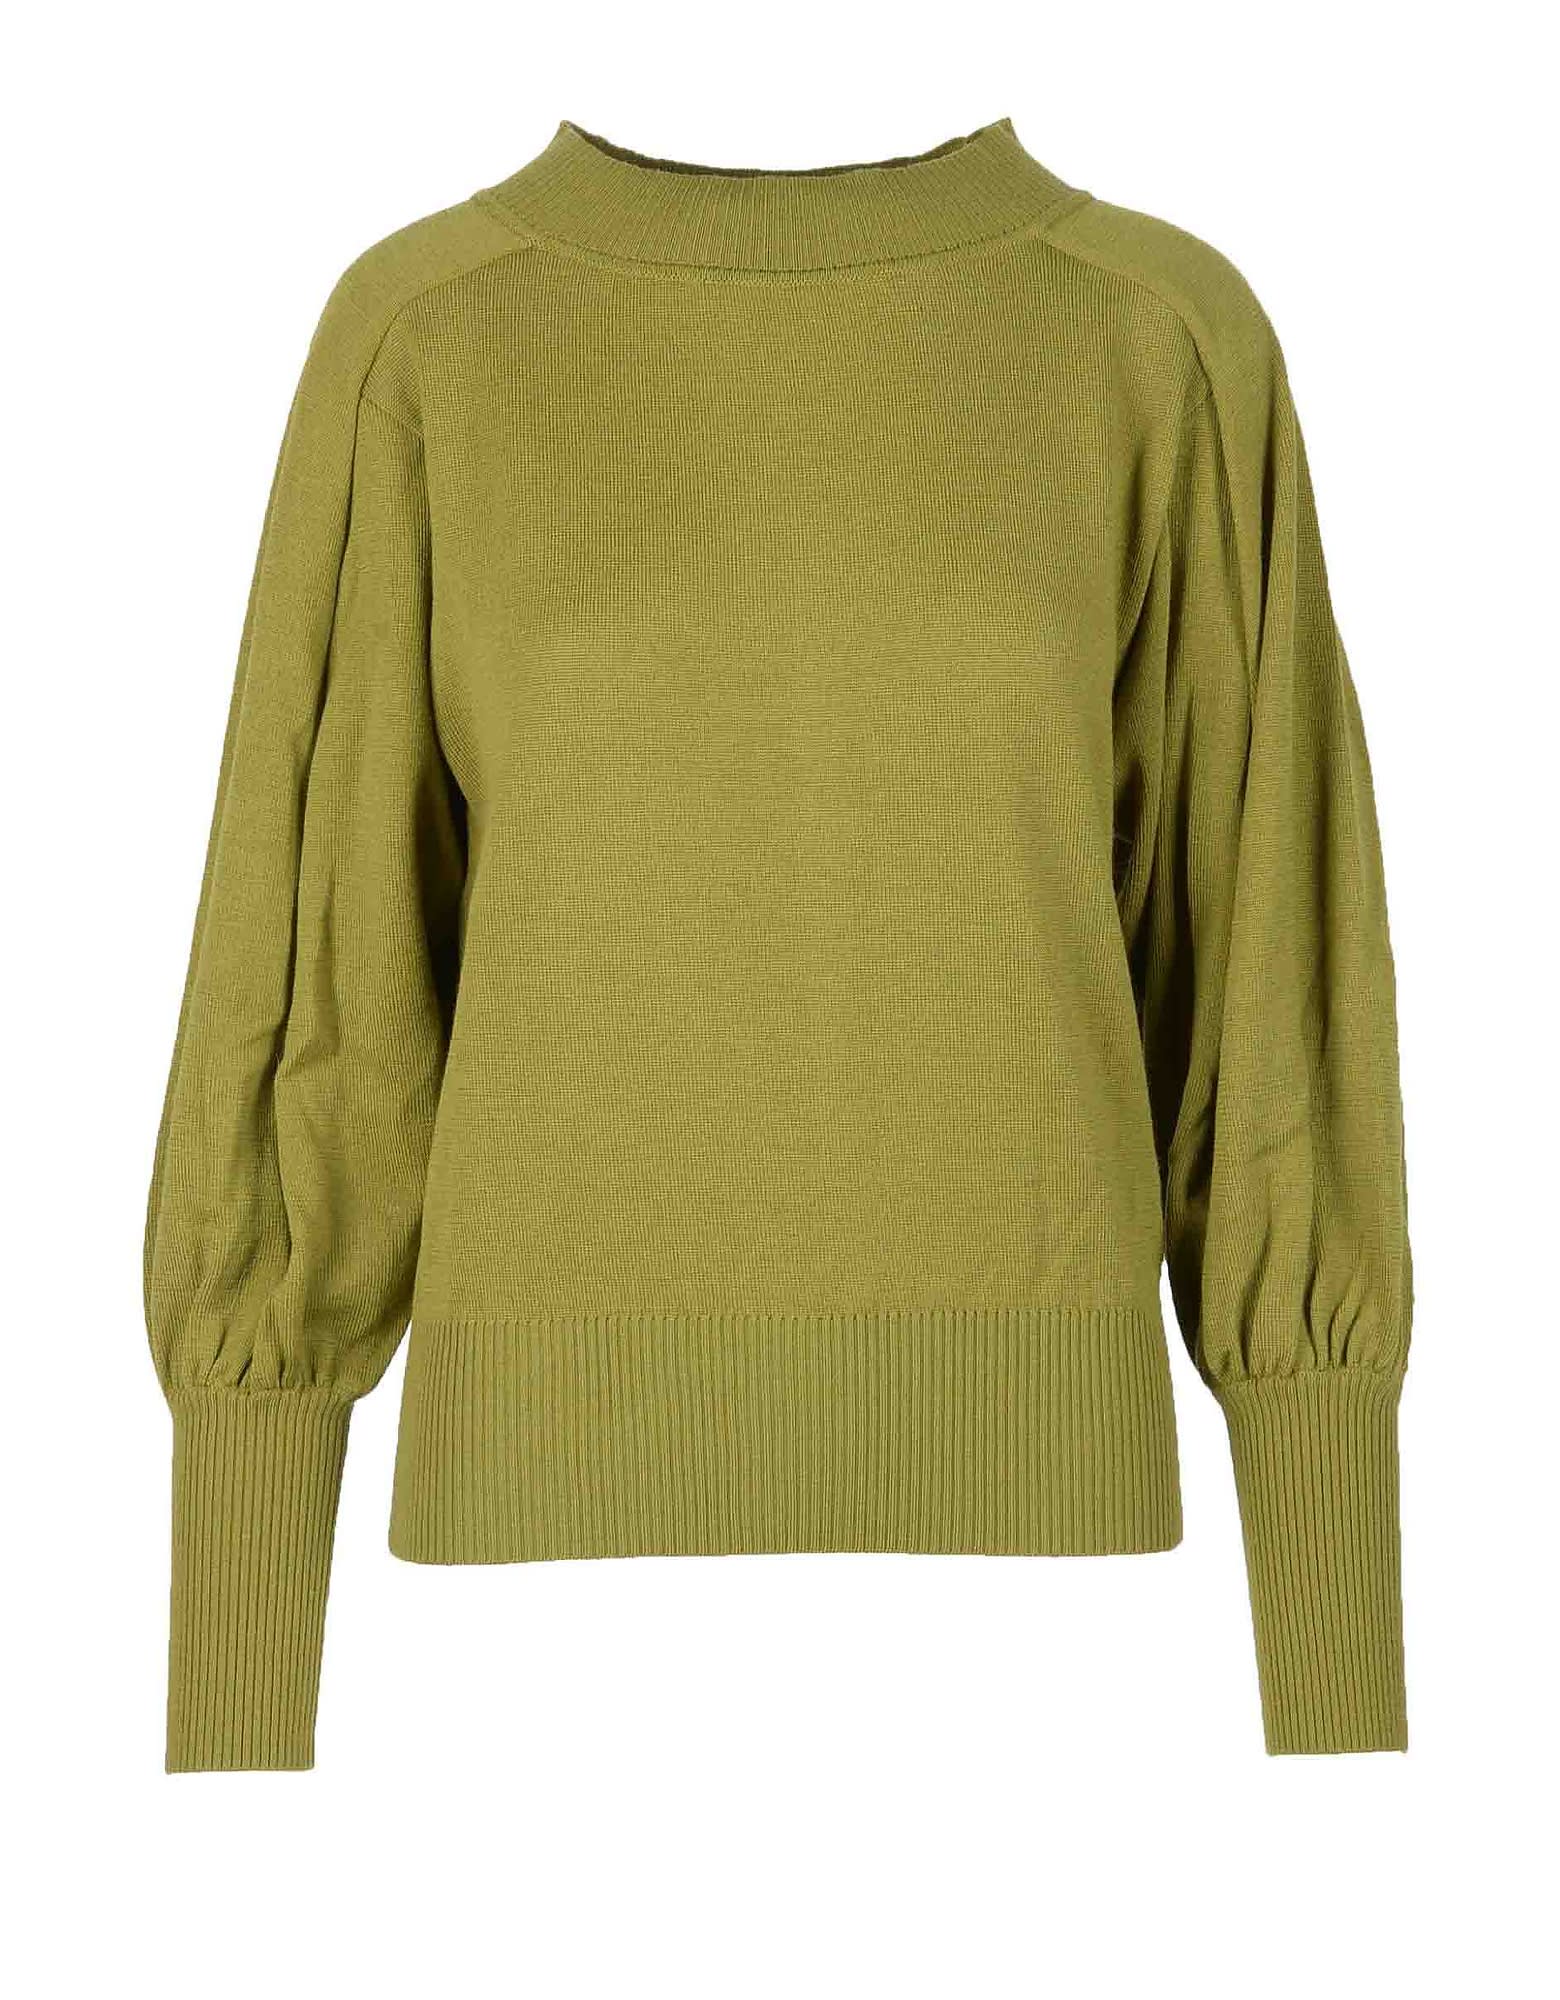 Alberta Ferretti Womens Military Green Sweater